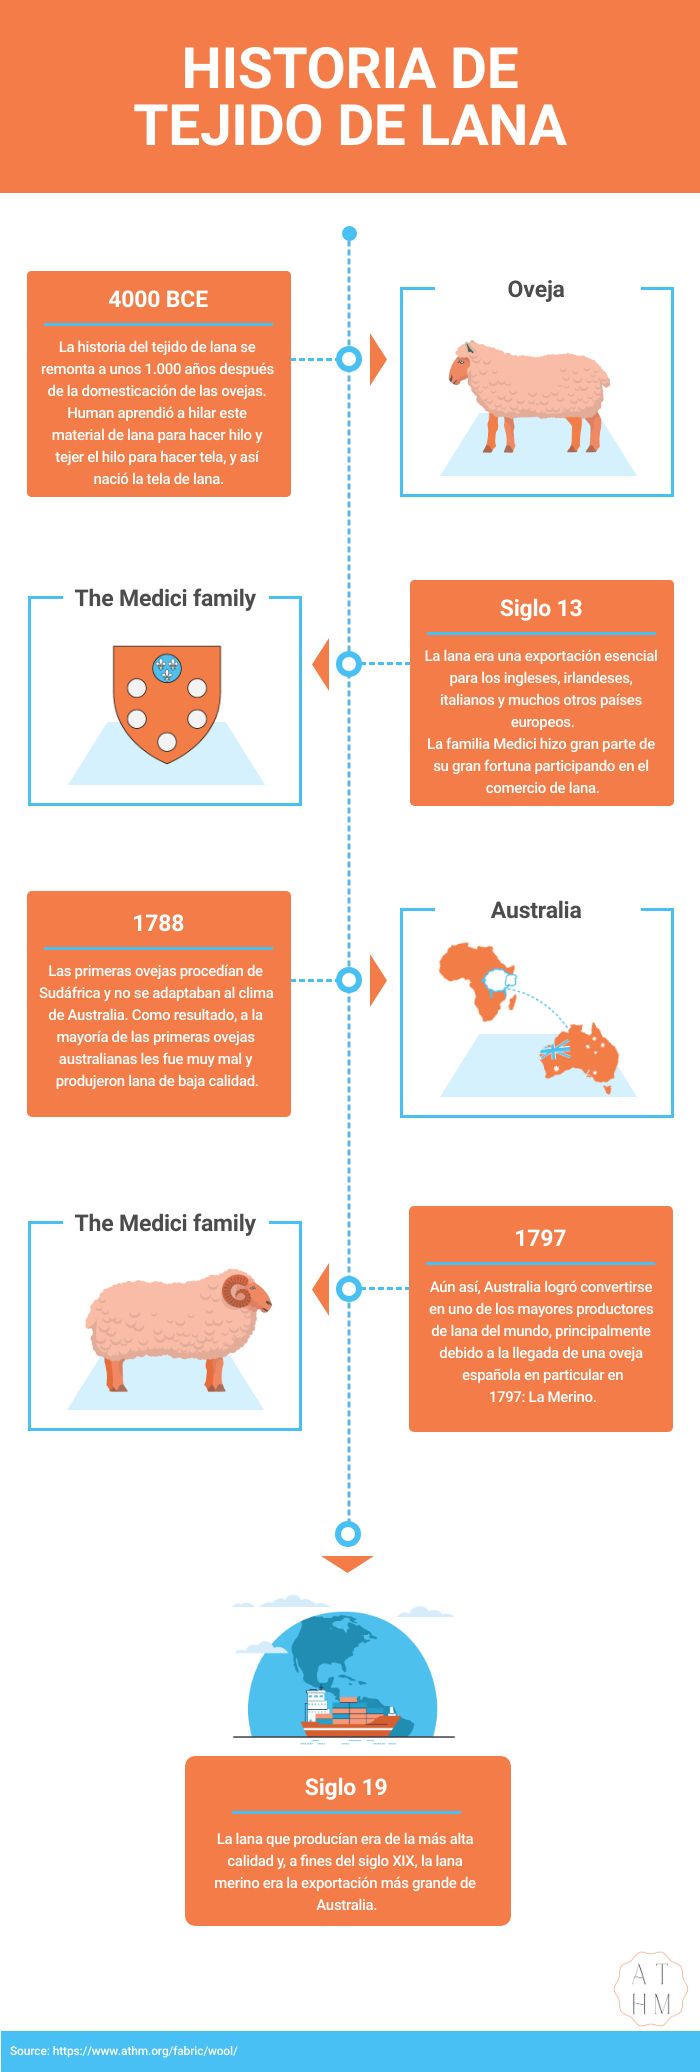 Historia del tejido de lana